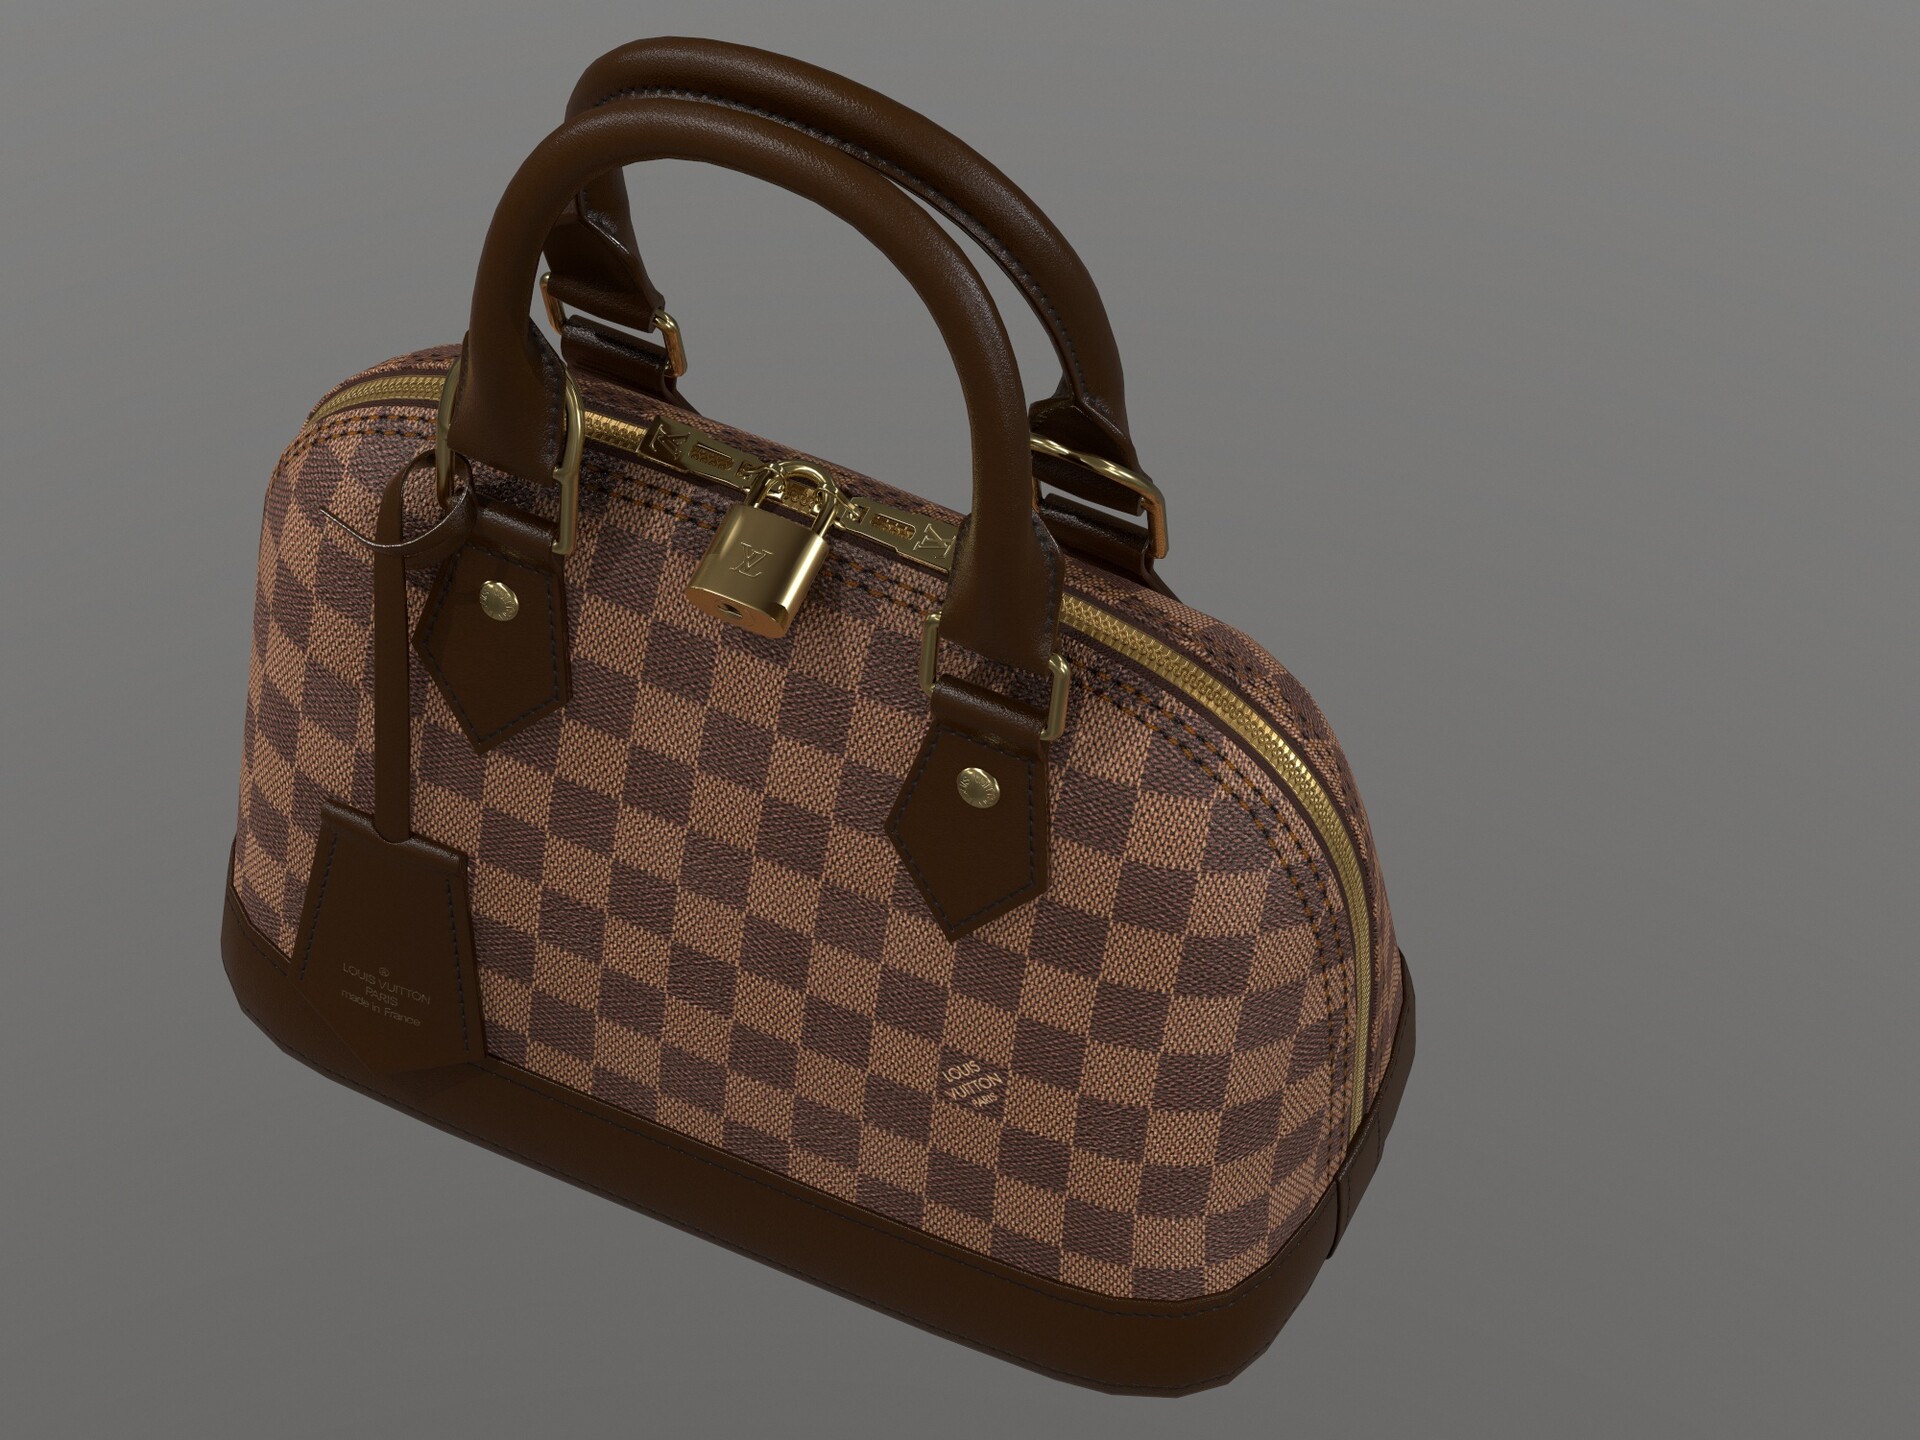 3D model Louis Vuitton Alma BB Top Handle Bag in Epi Leather Neutrals VR /  AR / low-poly